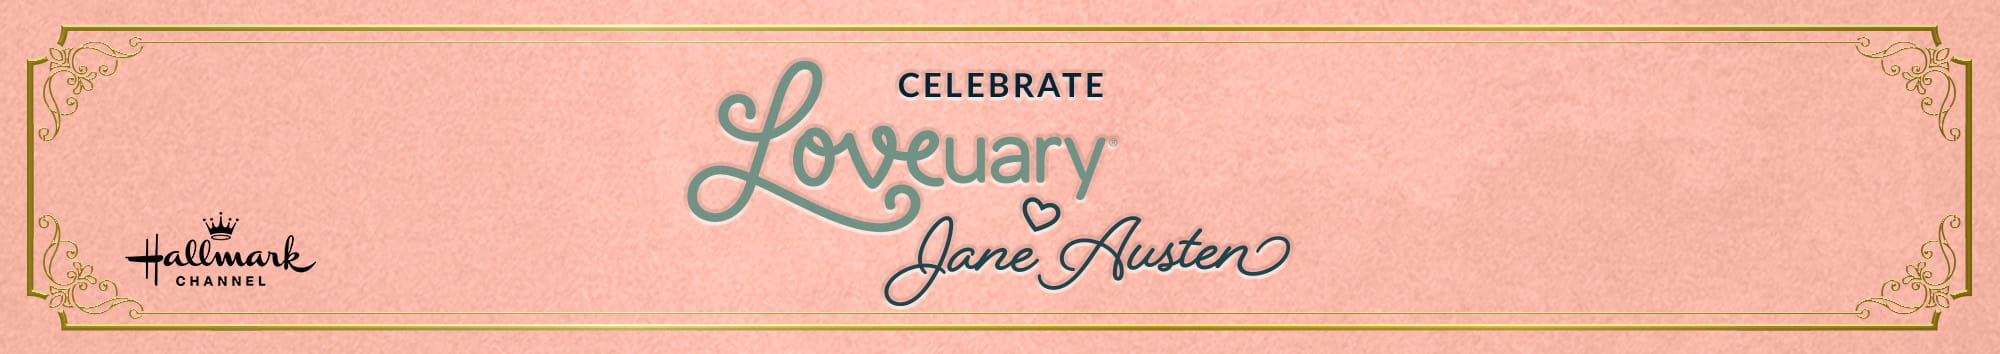 Celebrate Loveuary with Hallmark's Virtual Jane Austen Book Club 